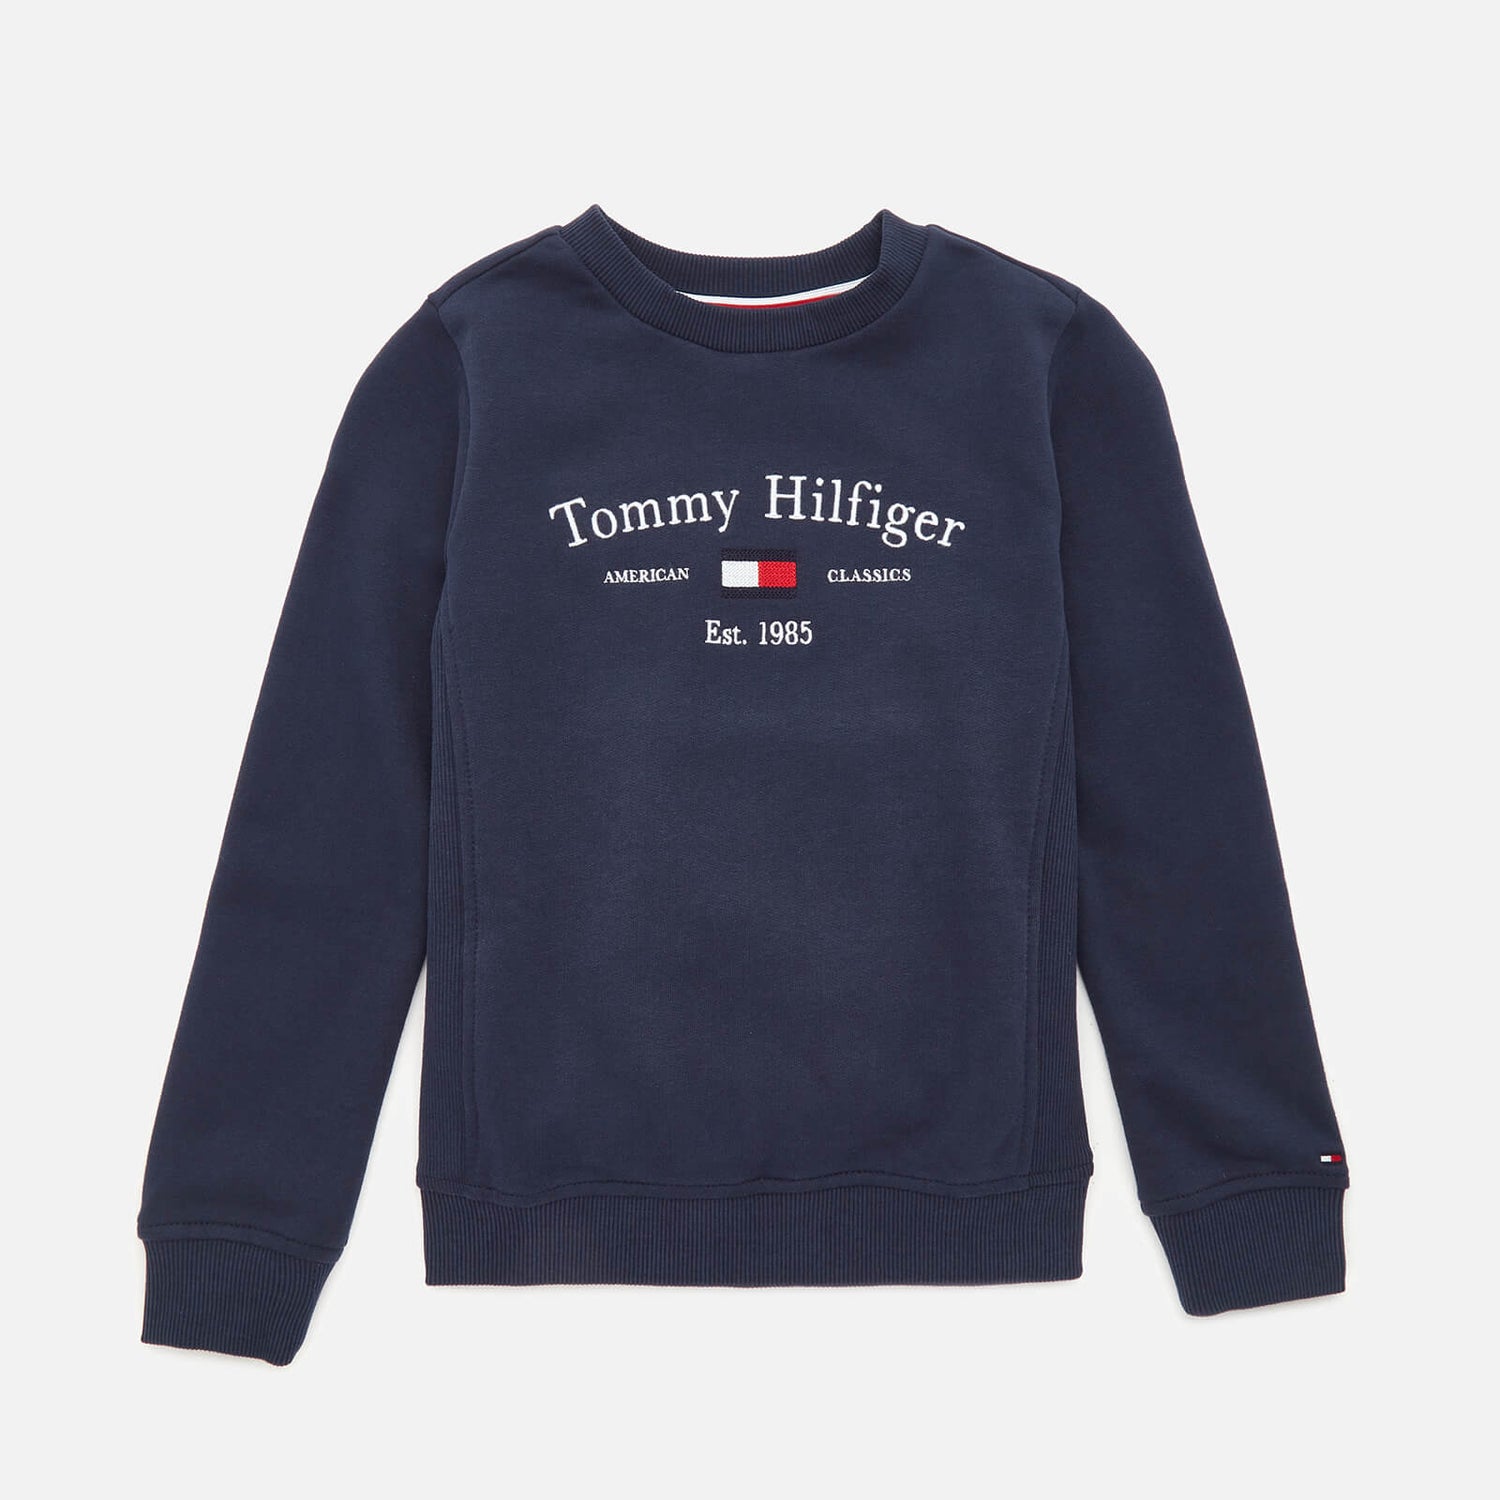 Tommy Hilfiger Boys' Artwork Sweatshirt - Twilight Navy